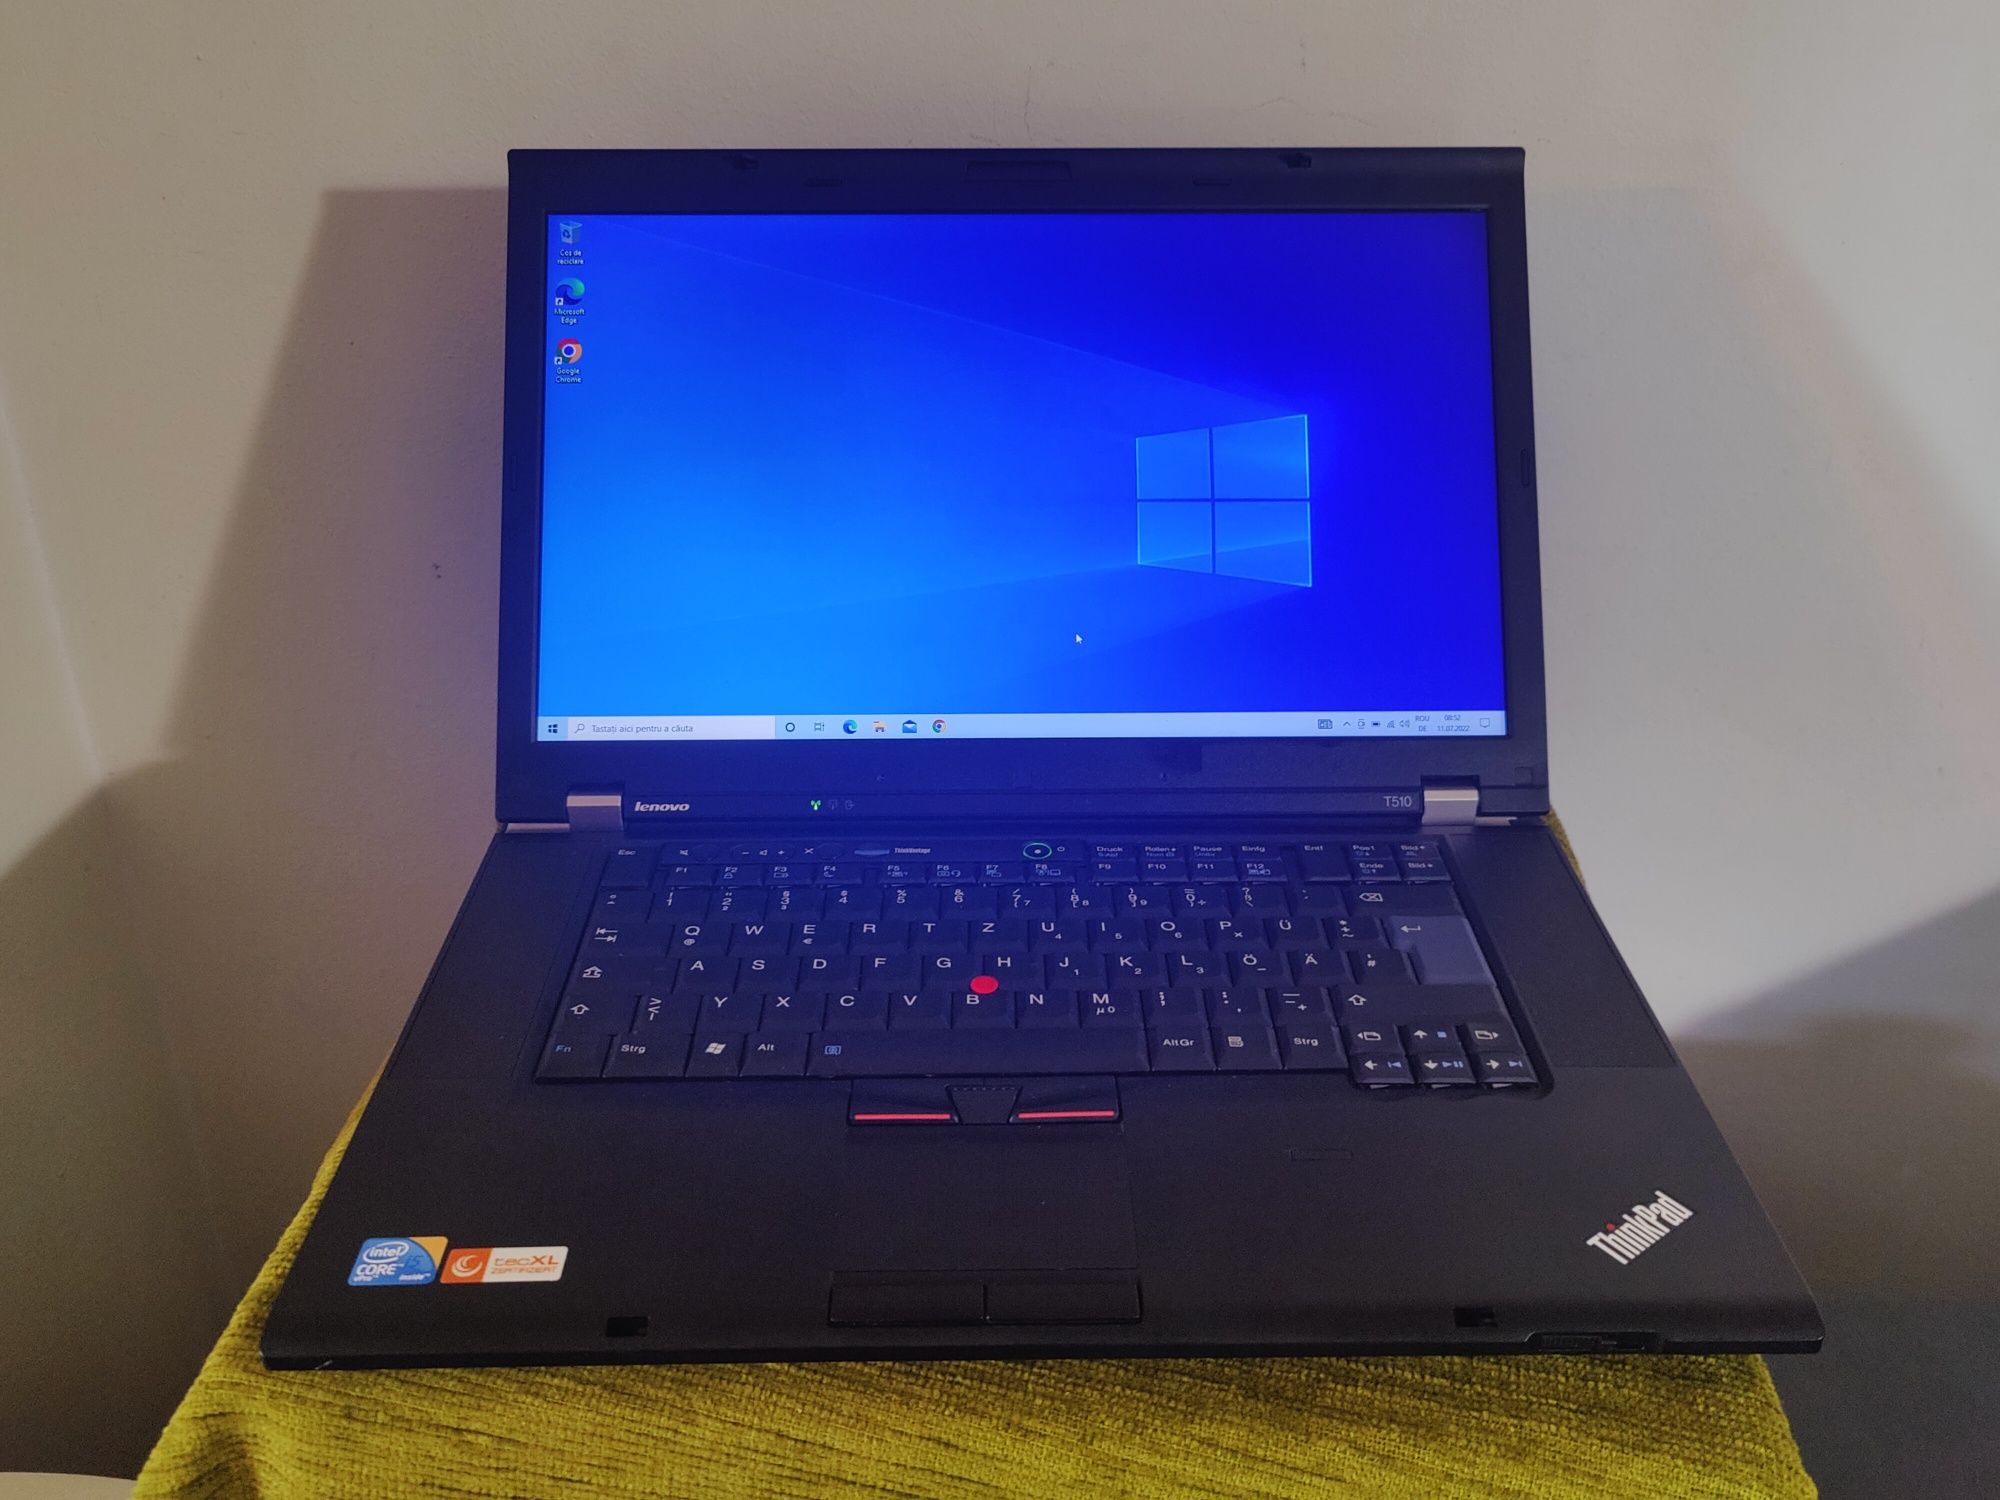 Laptop Lenovo Thinkpad T510, procesor Intel i5-M540, HDD 500gb,ram 4gb